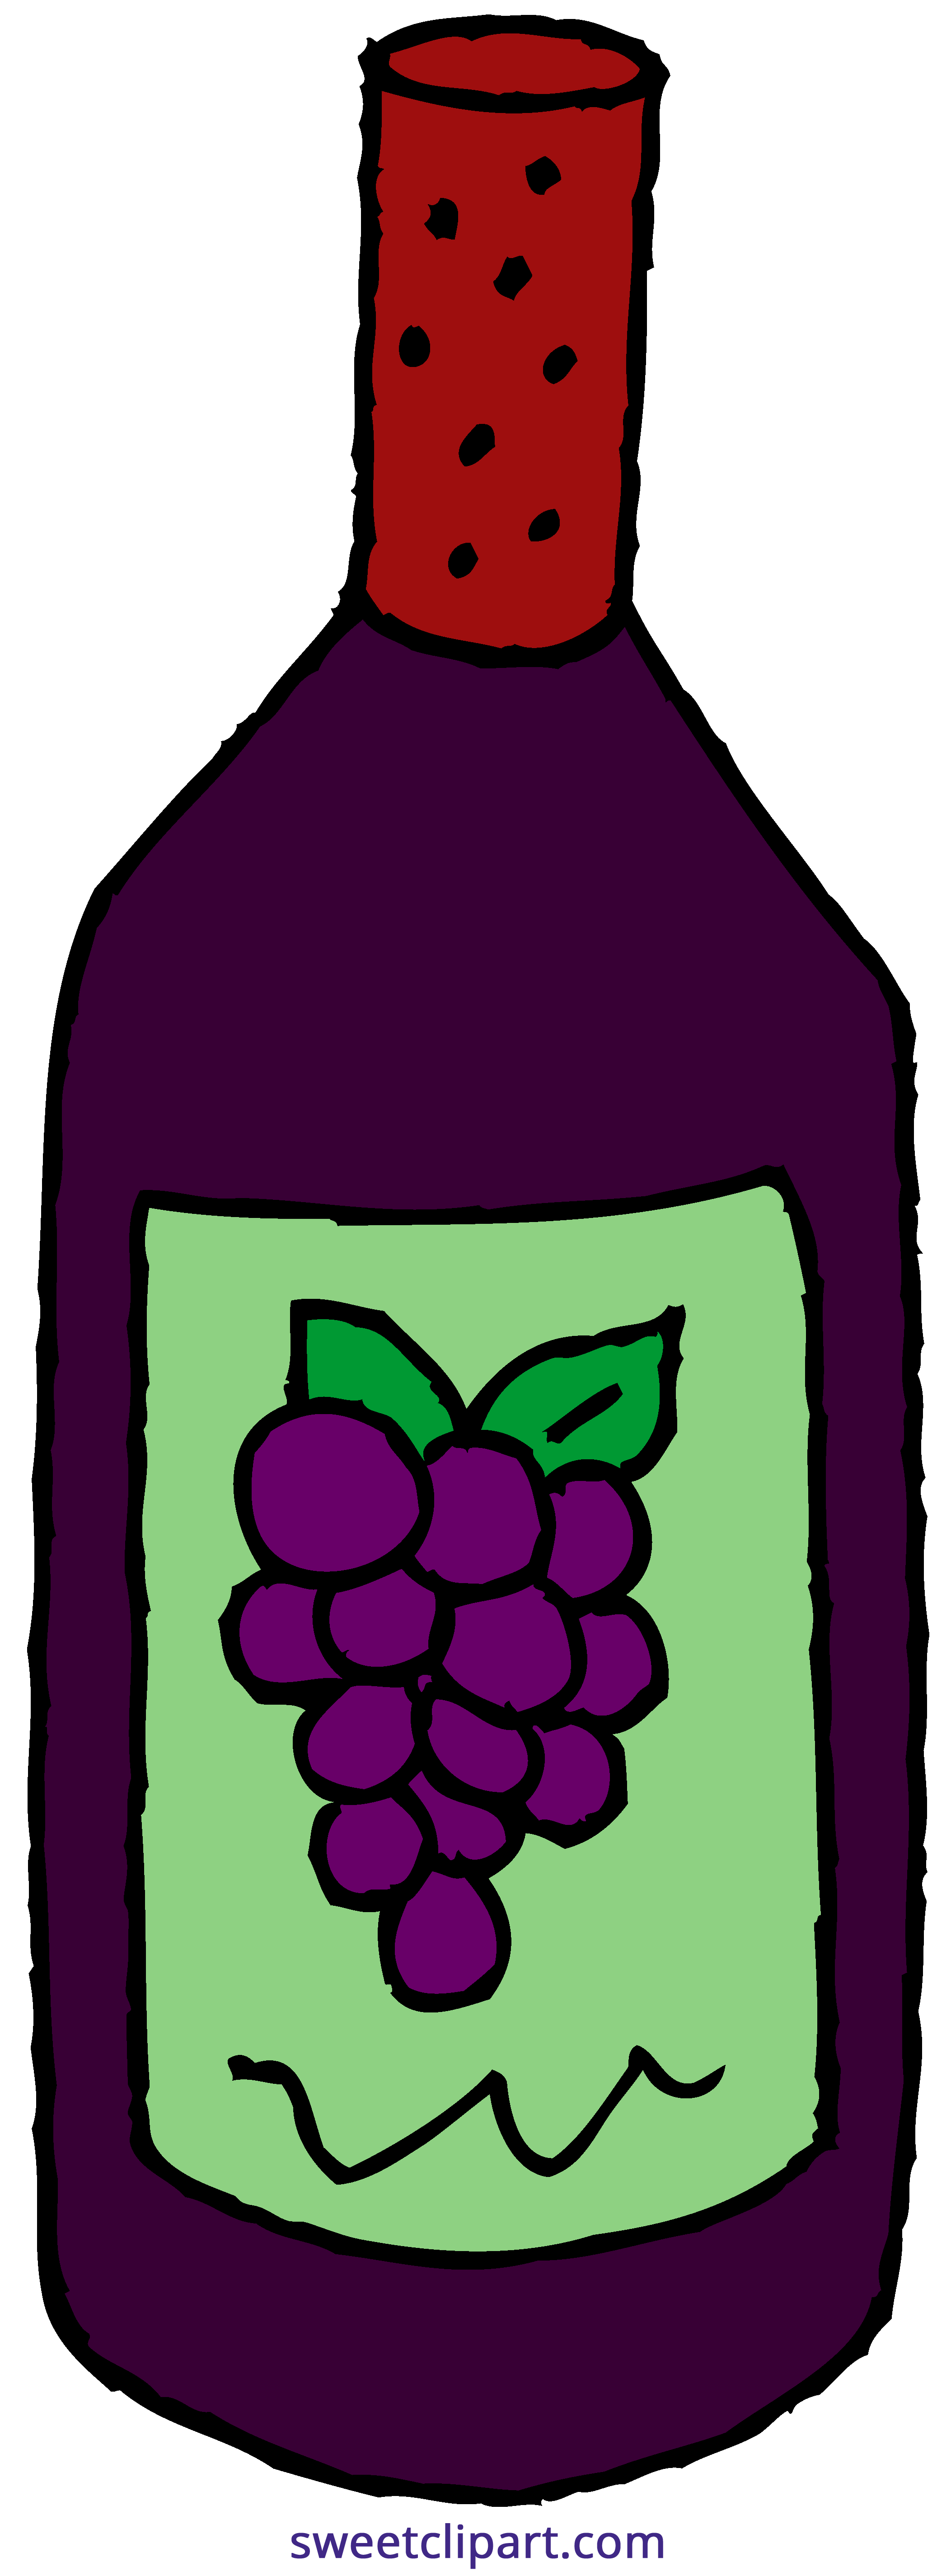 Grapes clipart wine grape. Bottle sweet clip art